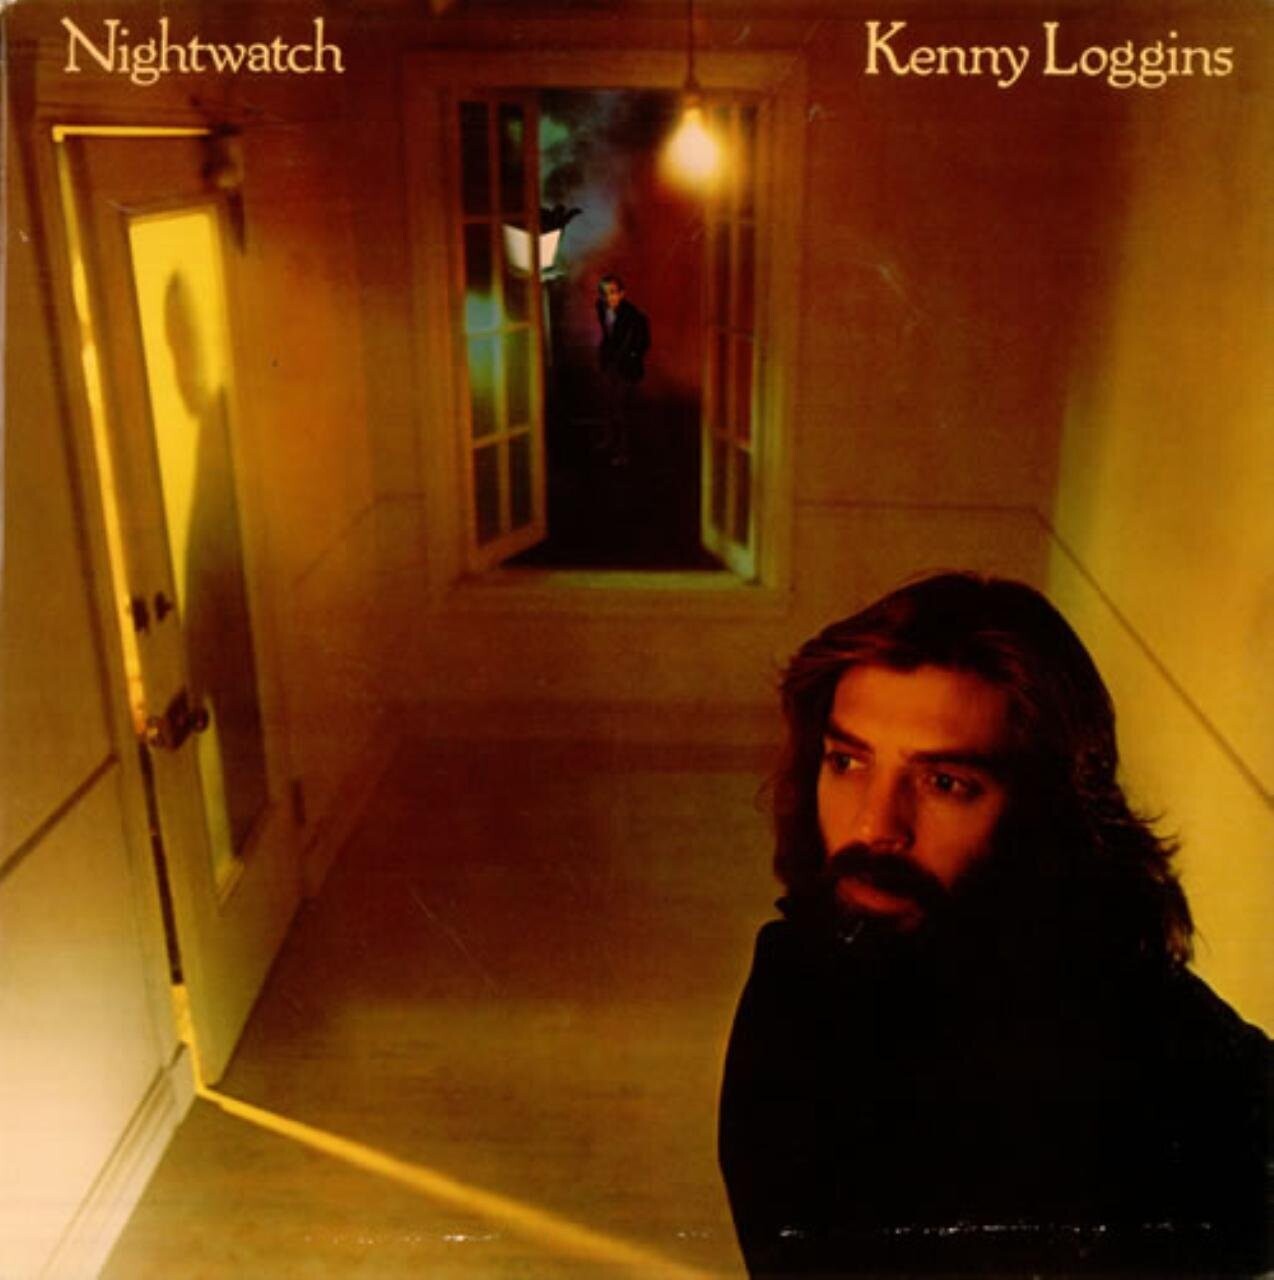 Kenny Loggins "Nightwatch" EX+ 1978